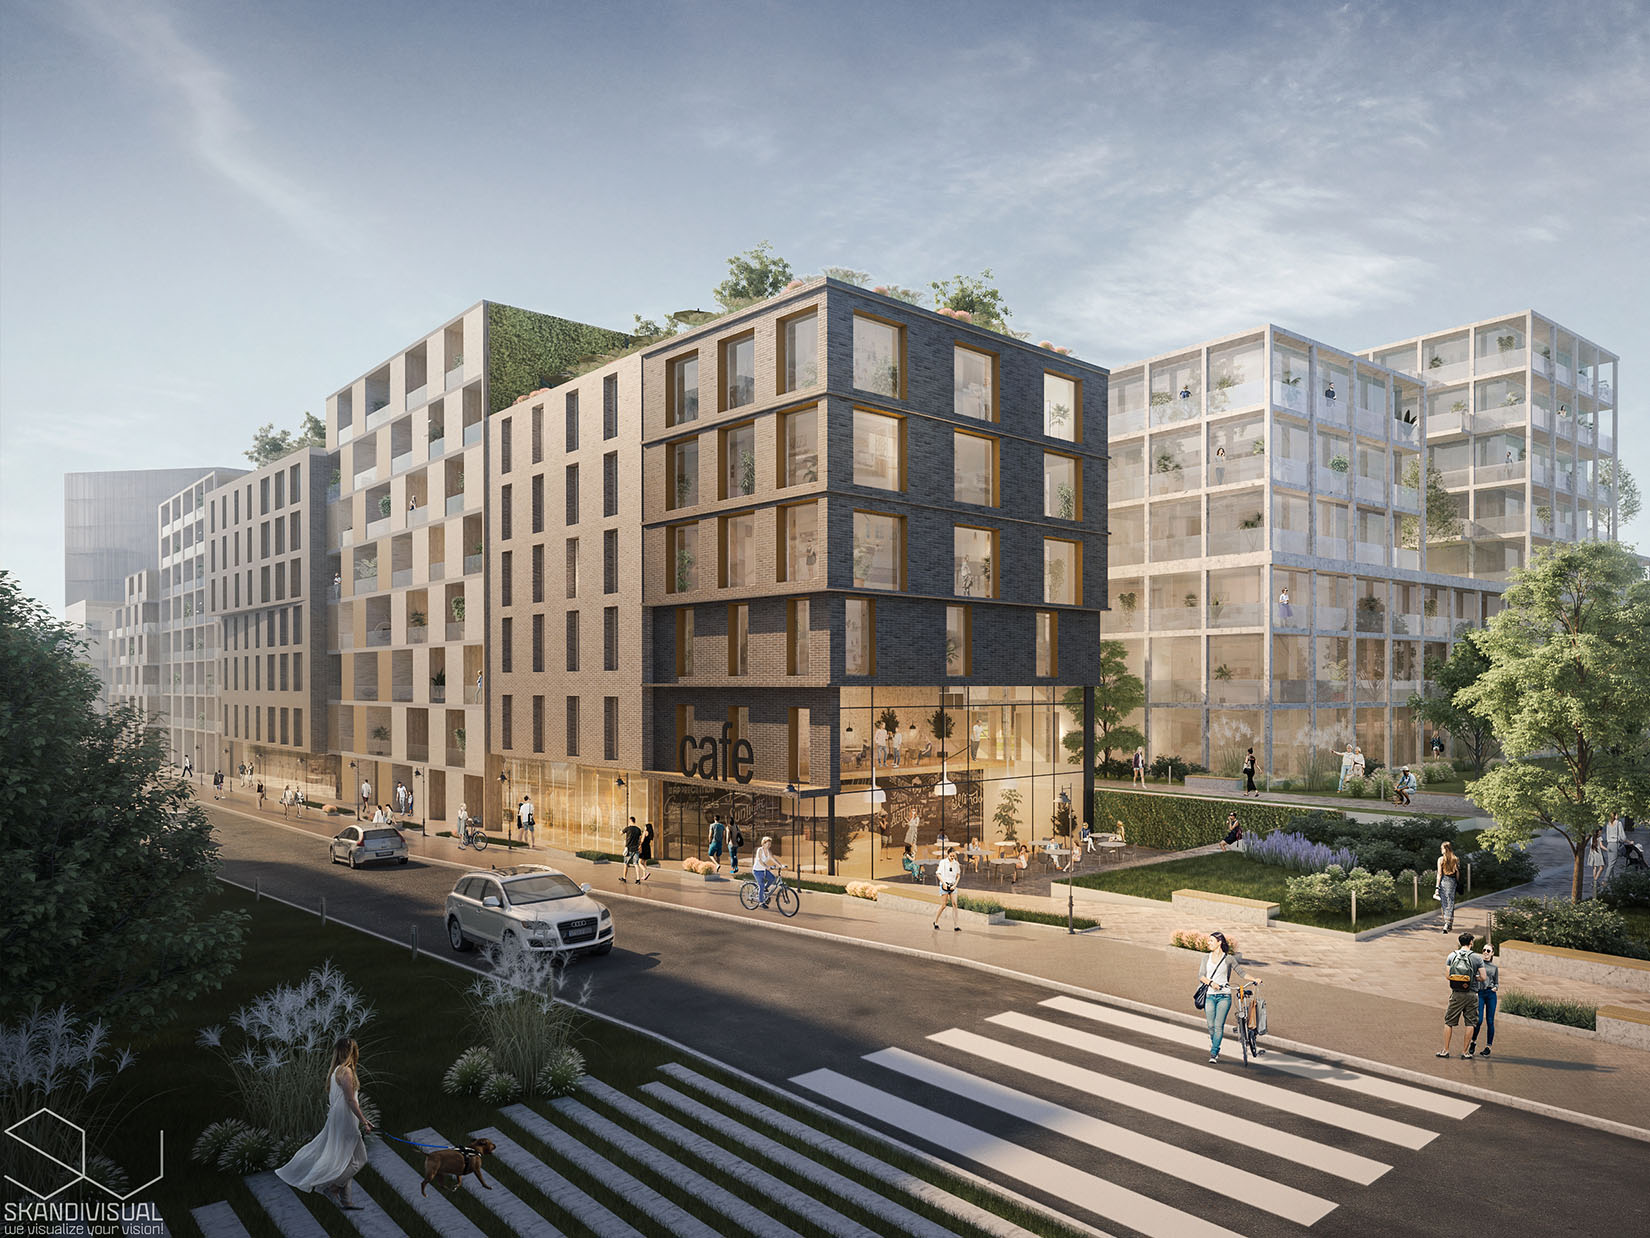 Urban Development in Oslo